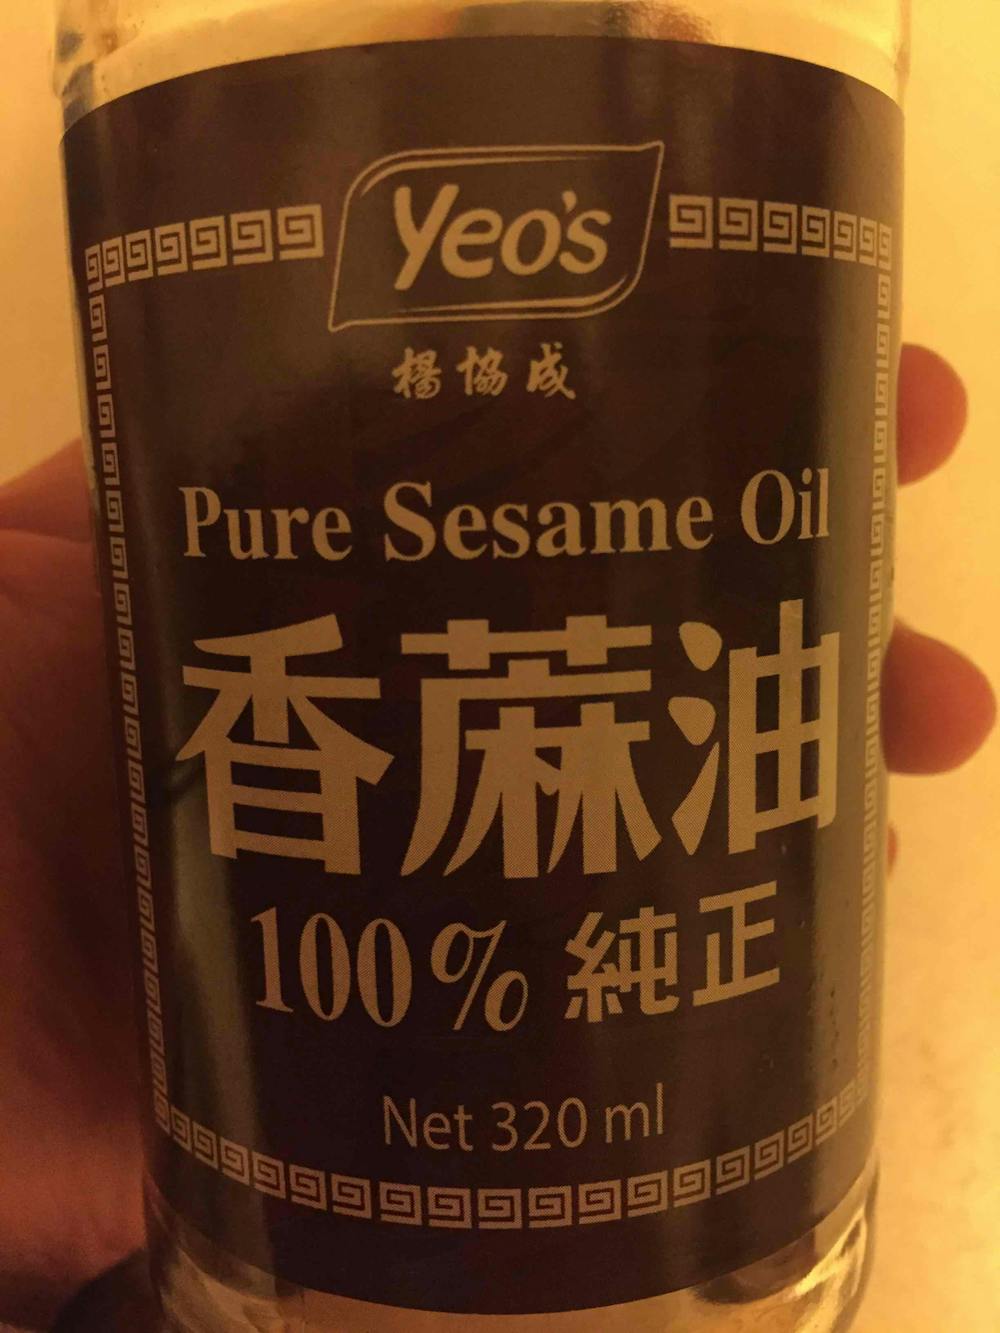 Pure sesame oil, Yeo's